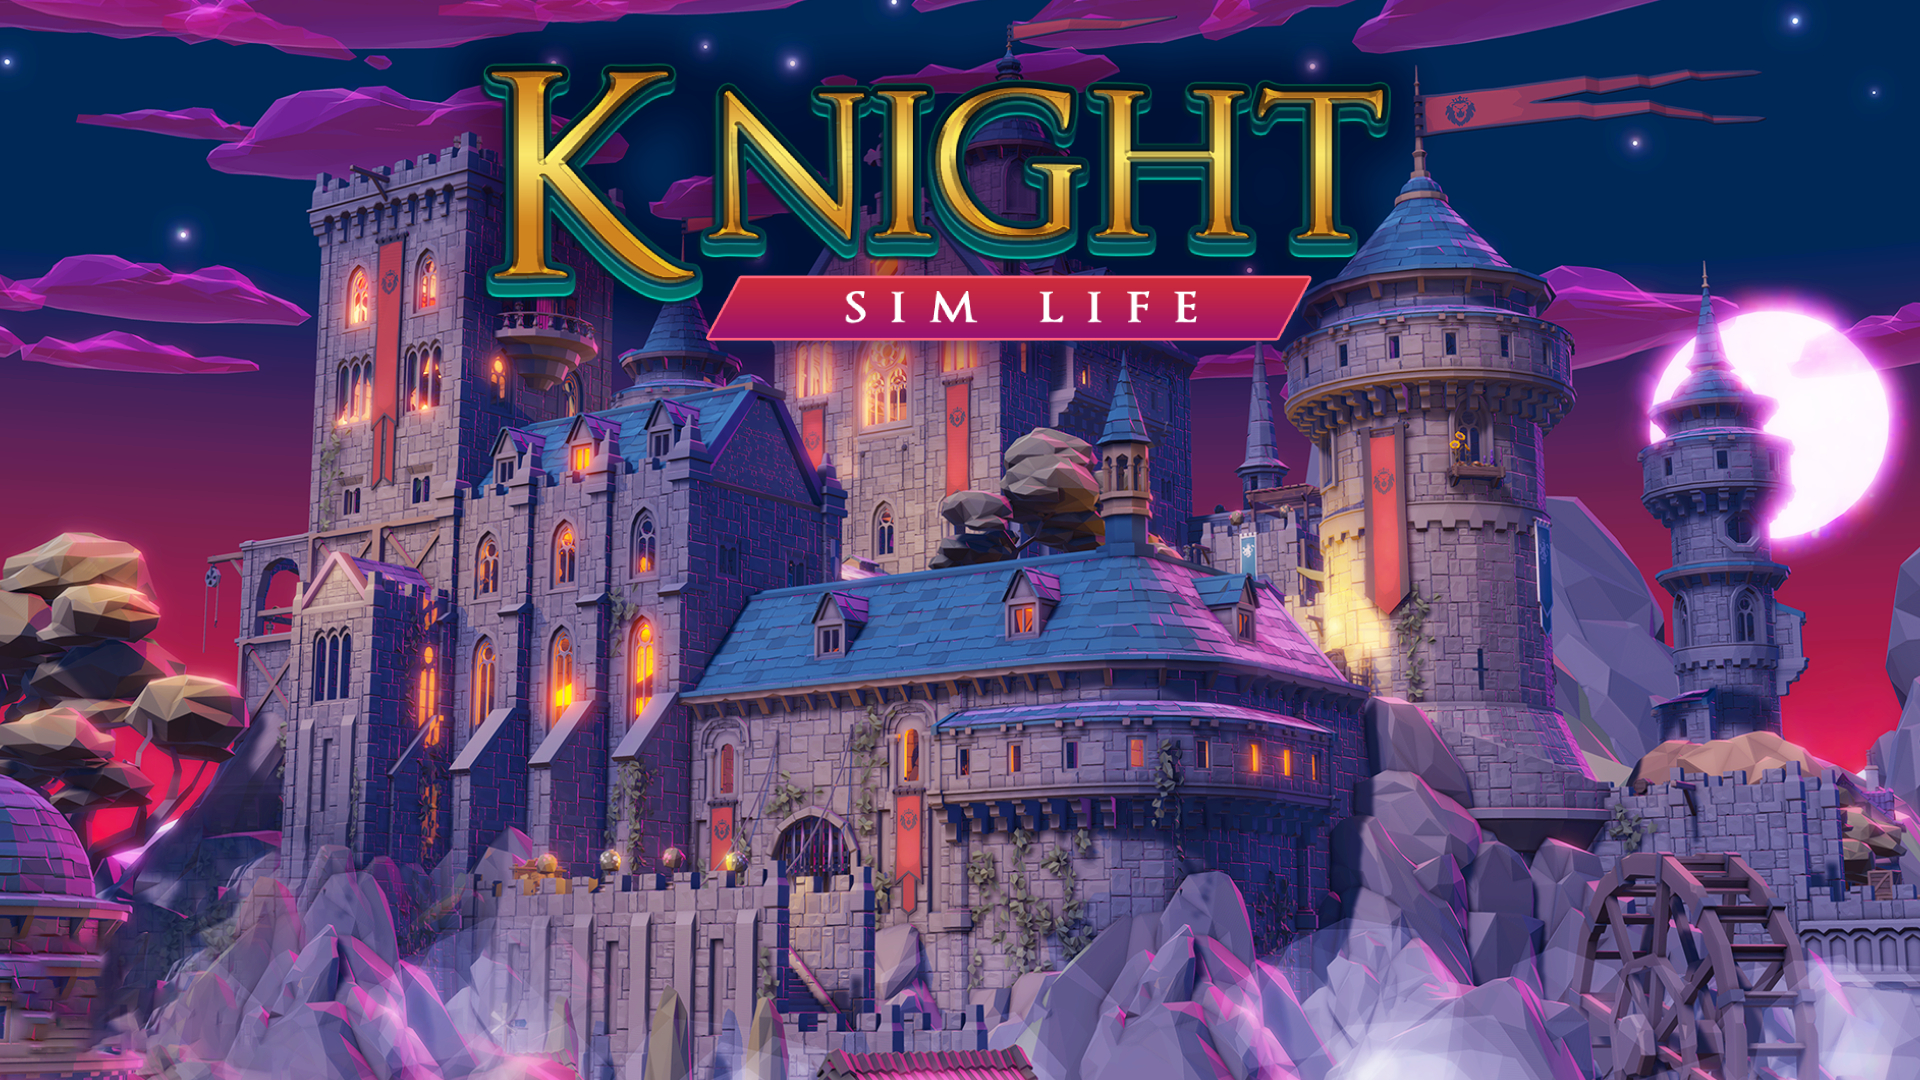 Knight Sim Life